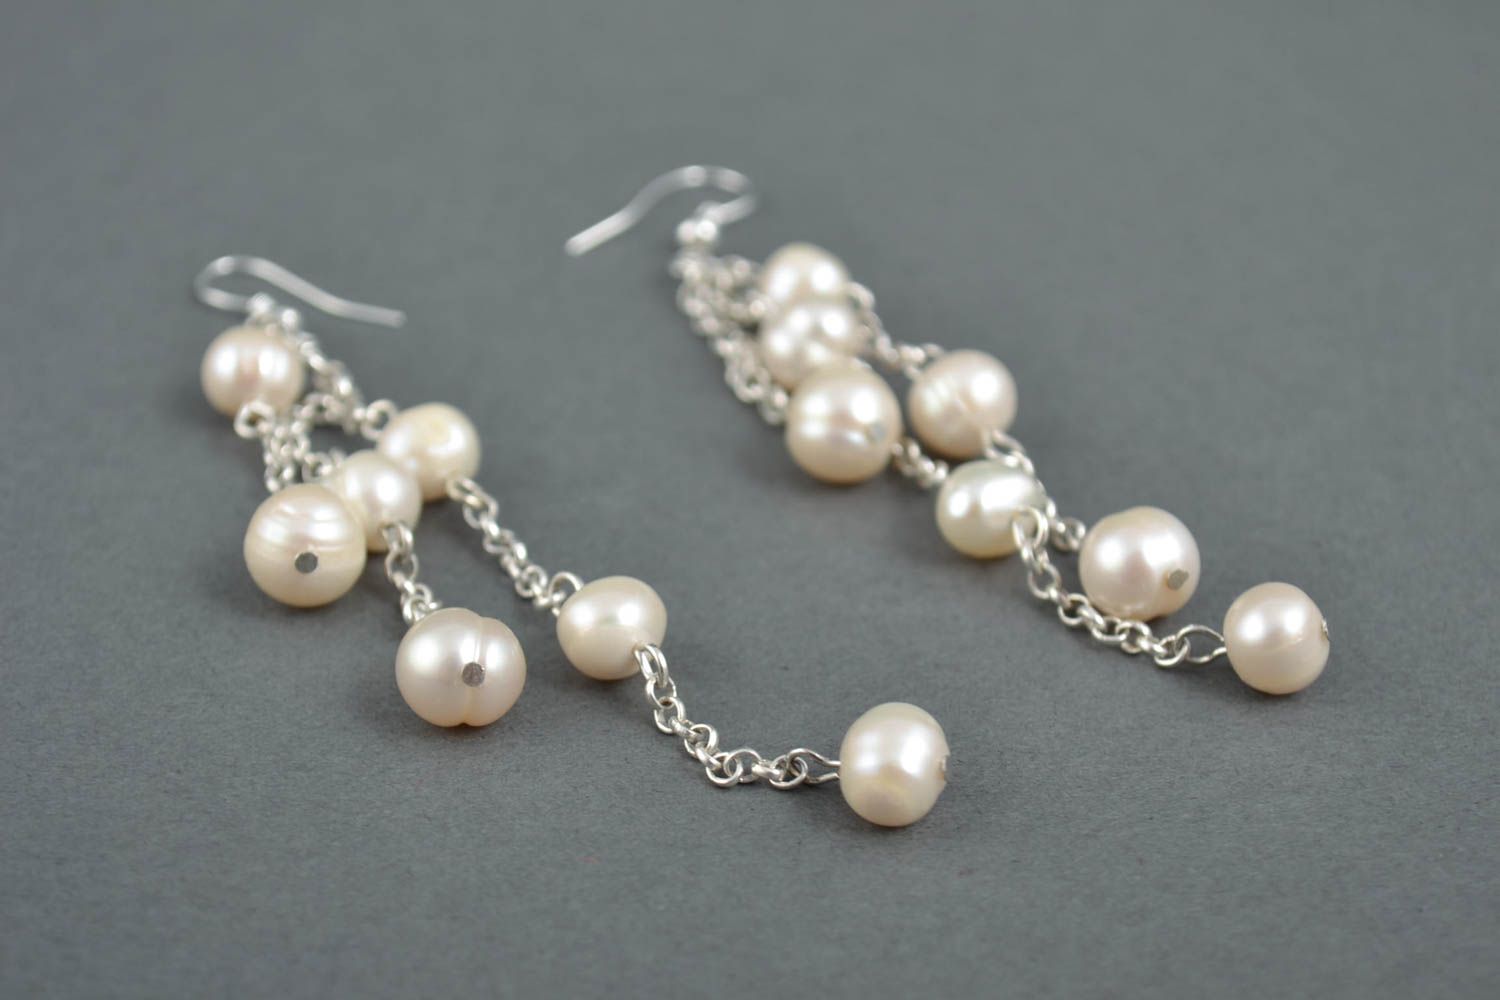 Dangling earrings handmade pearl jewelry long earrings fashion accessories photo 4